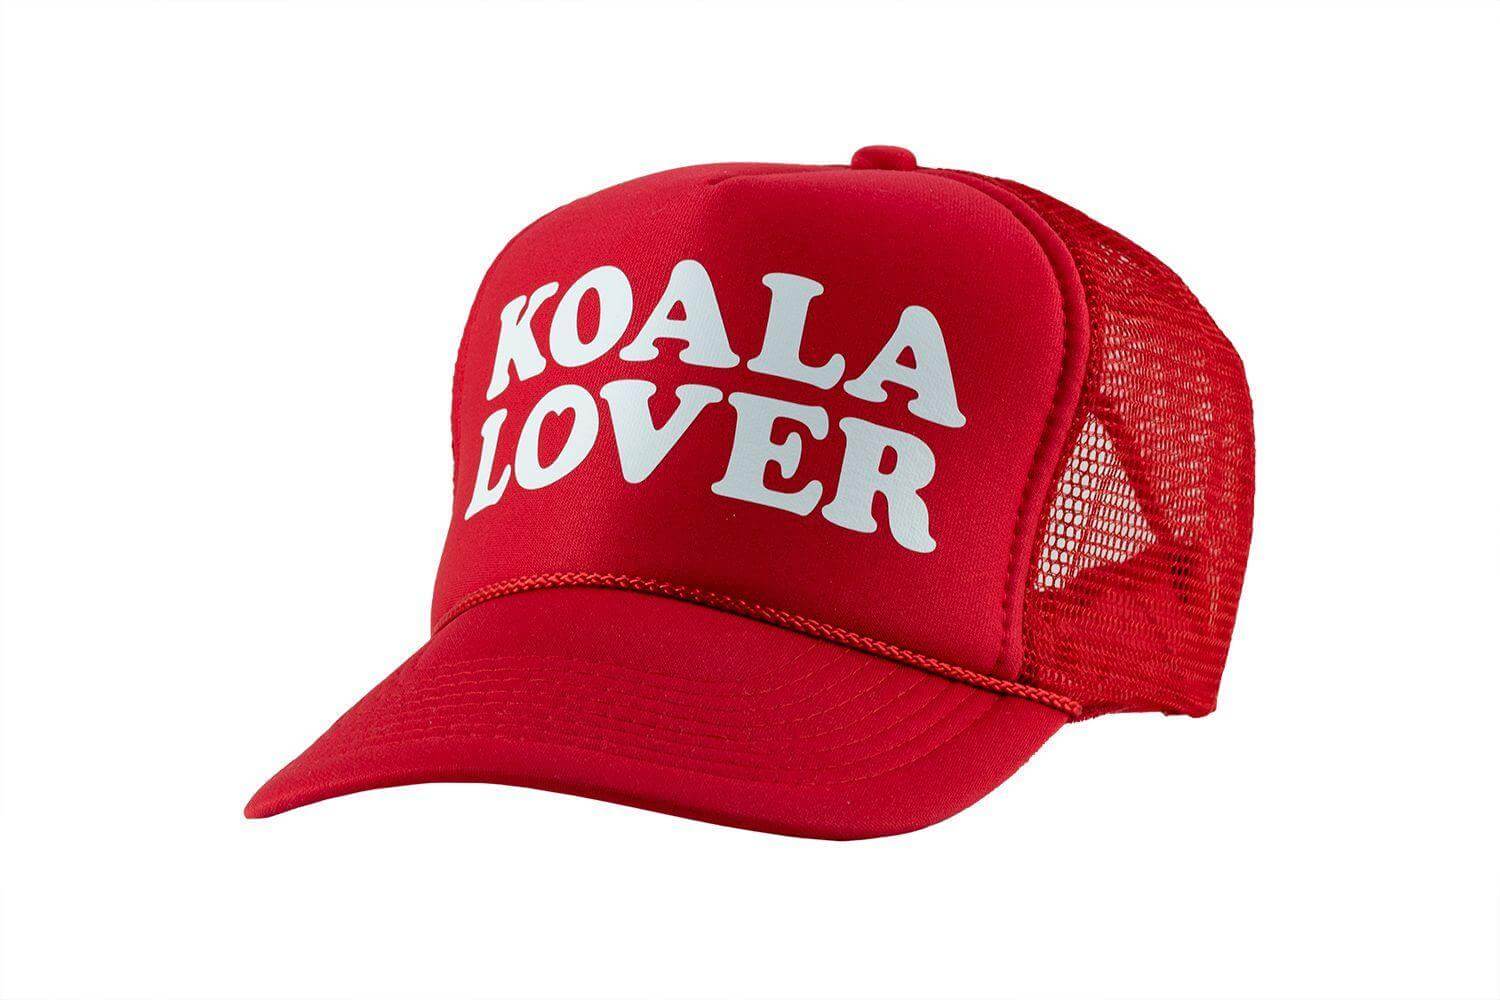 Koala Lover (Parrot red) high crown trucker cap with mesh back and snapback- Tropic Trucker Australia®